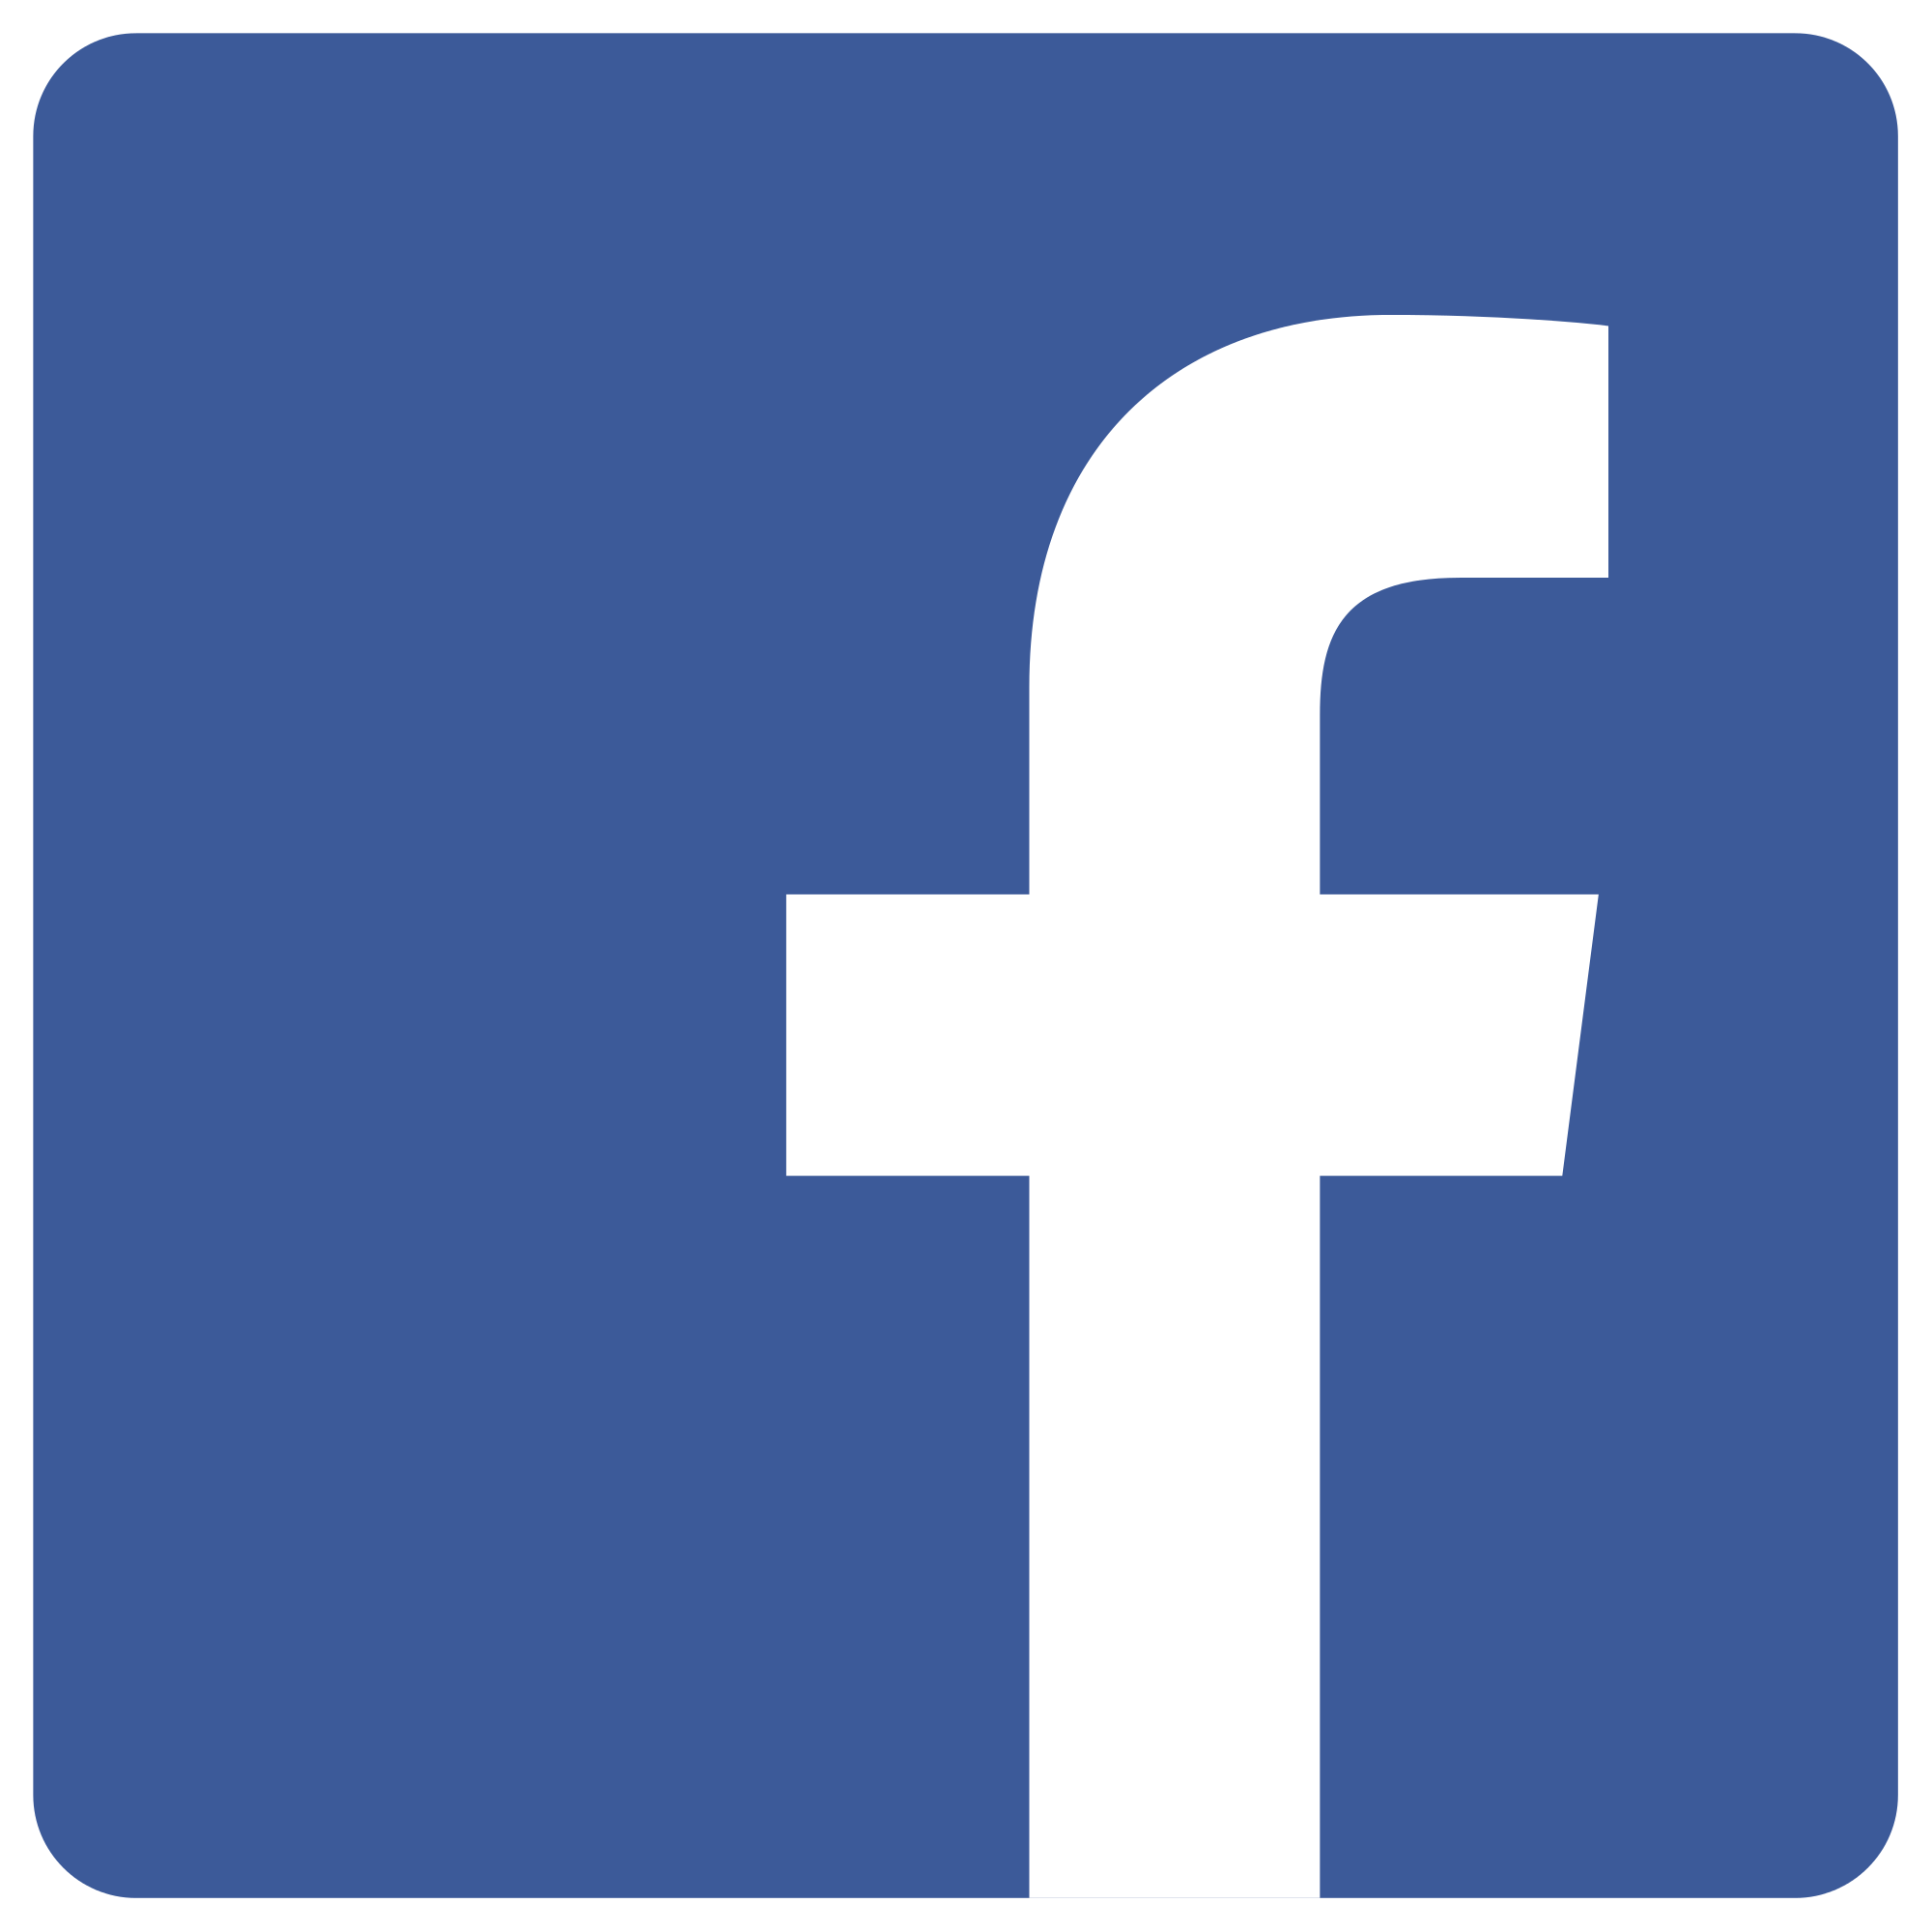 ECAI 2016 Facebook